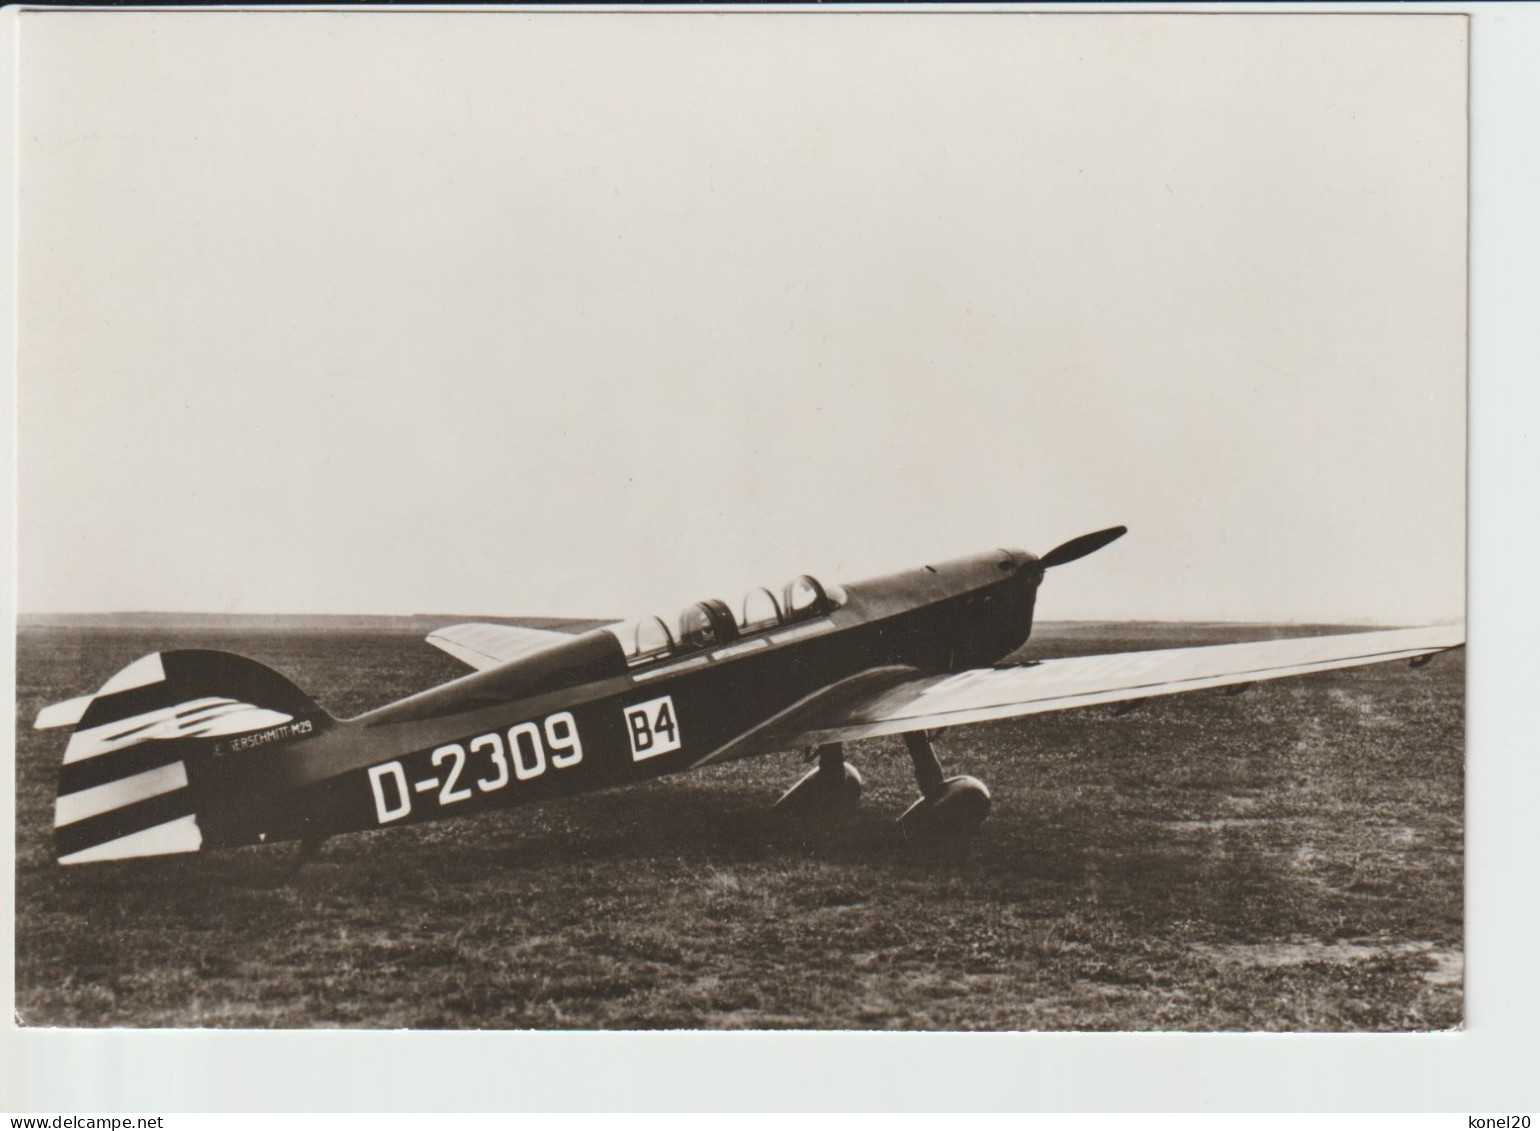 Pc Messerscmitt / BFW -M 29 Aircraft - 1919-1938: Fra Le Due Guerre